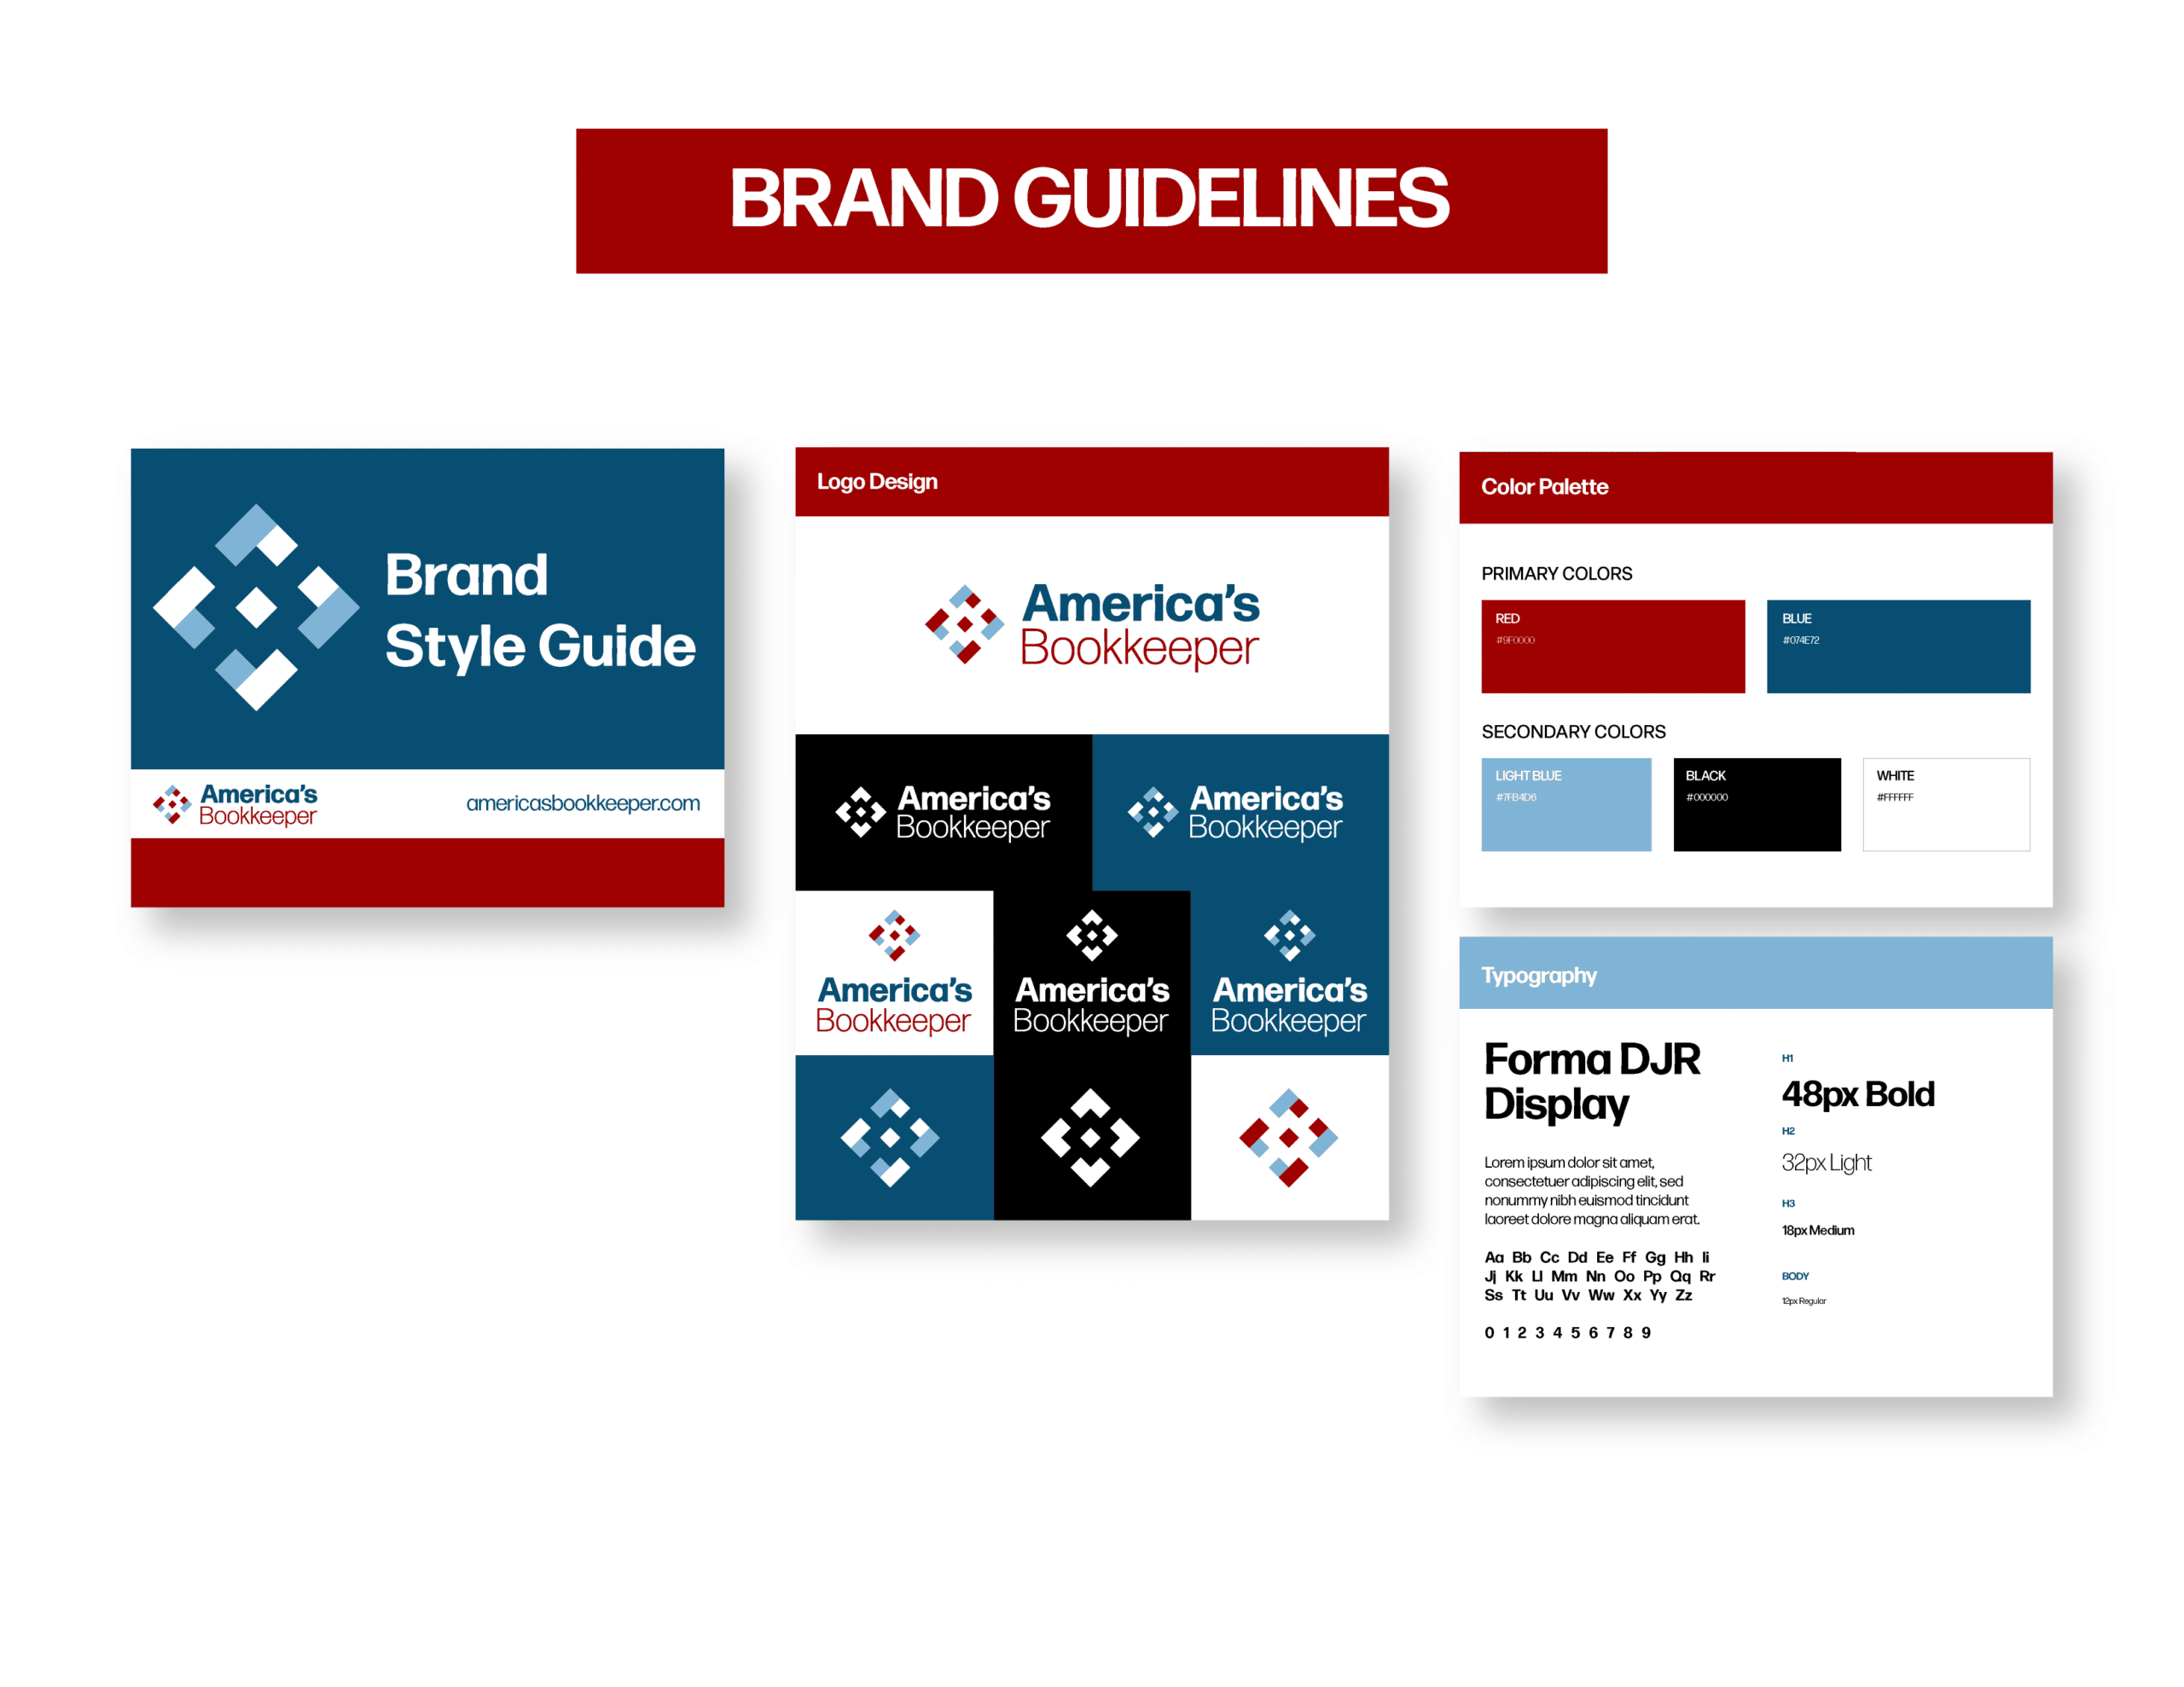 03Americas__Branding Guidelines